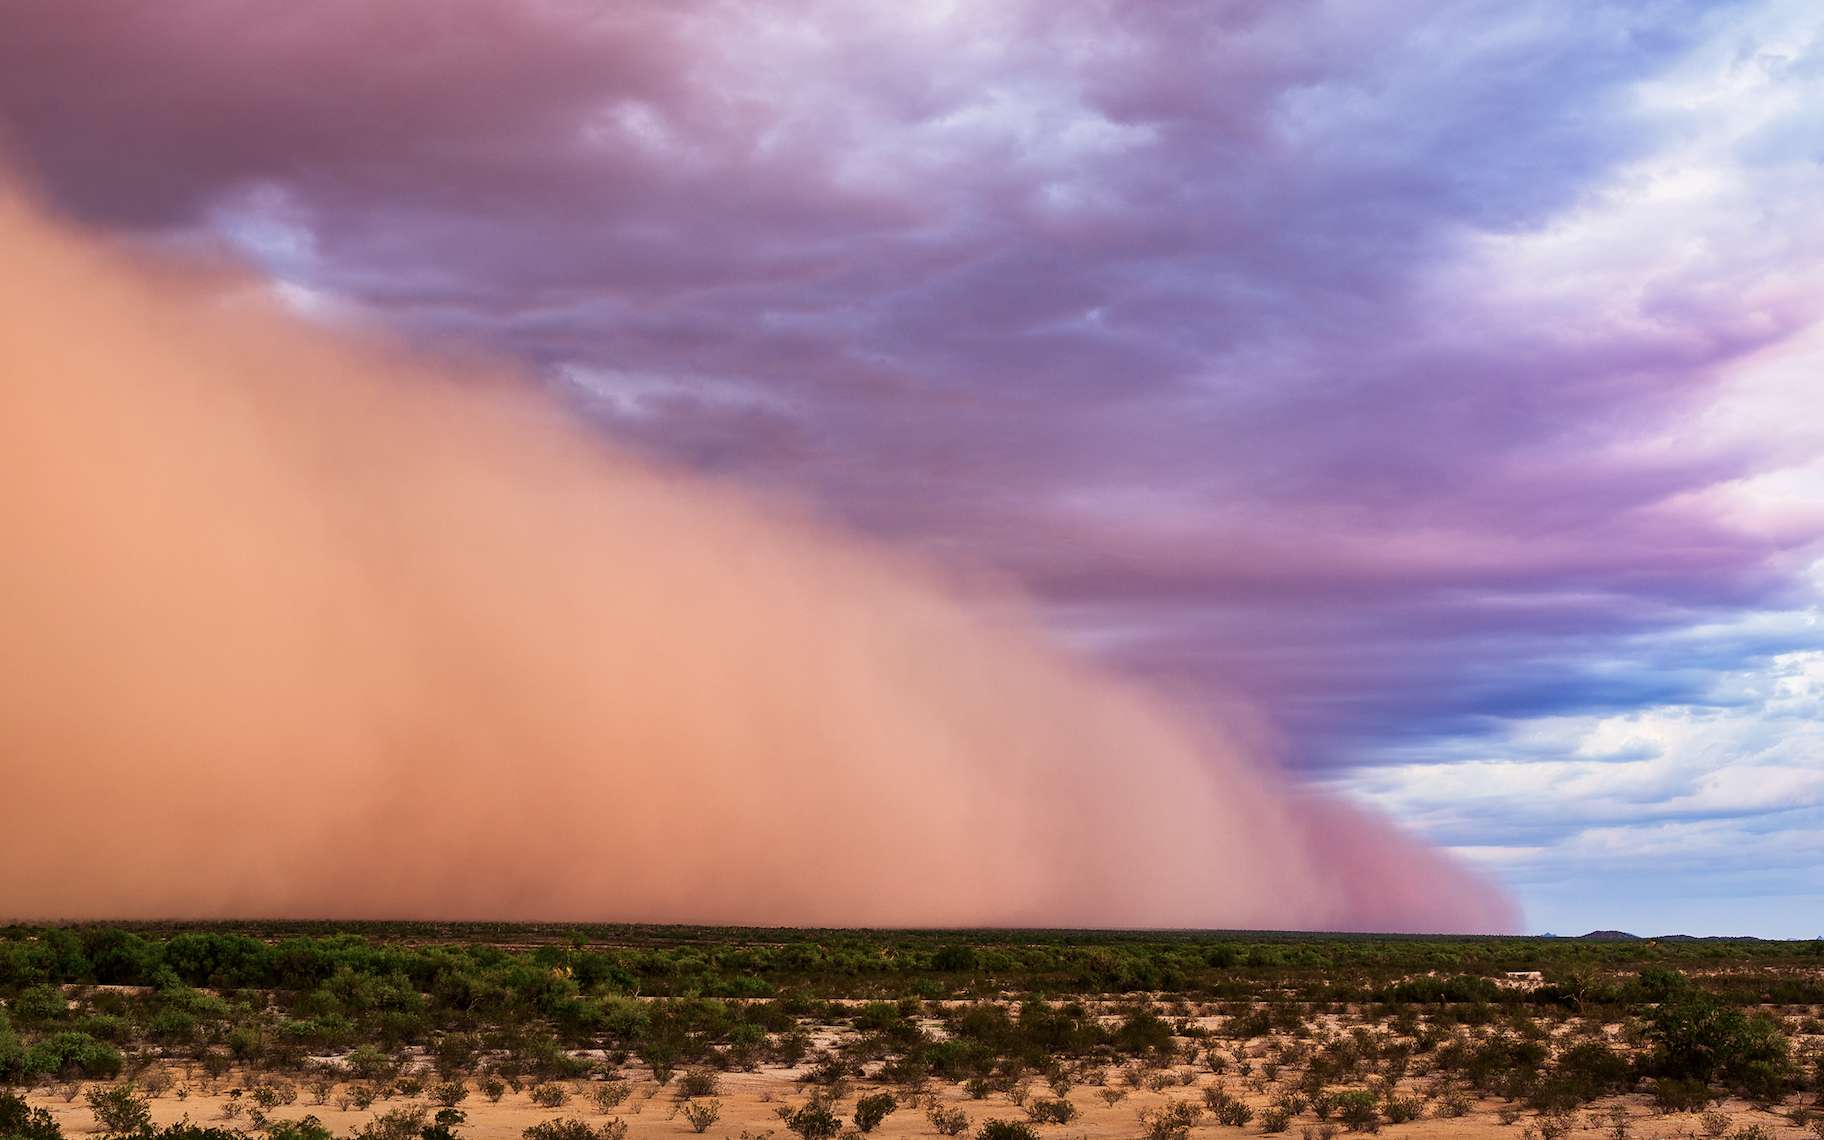 Tempête de sable en Arizona. © JSirlin, Adobe Stock